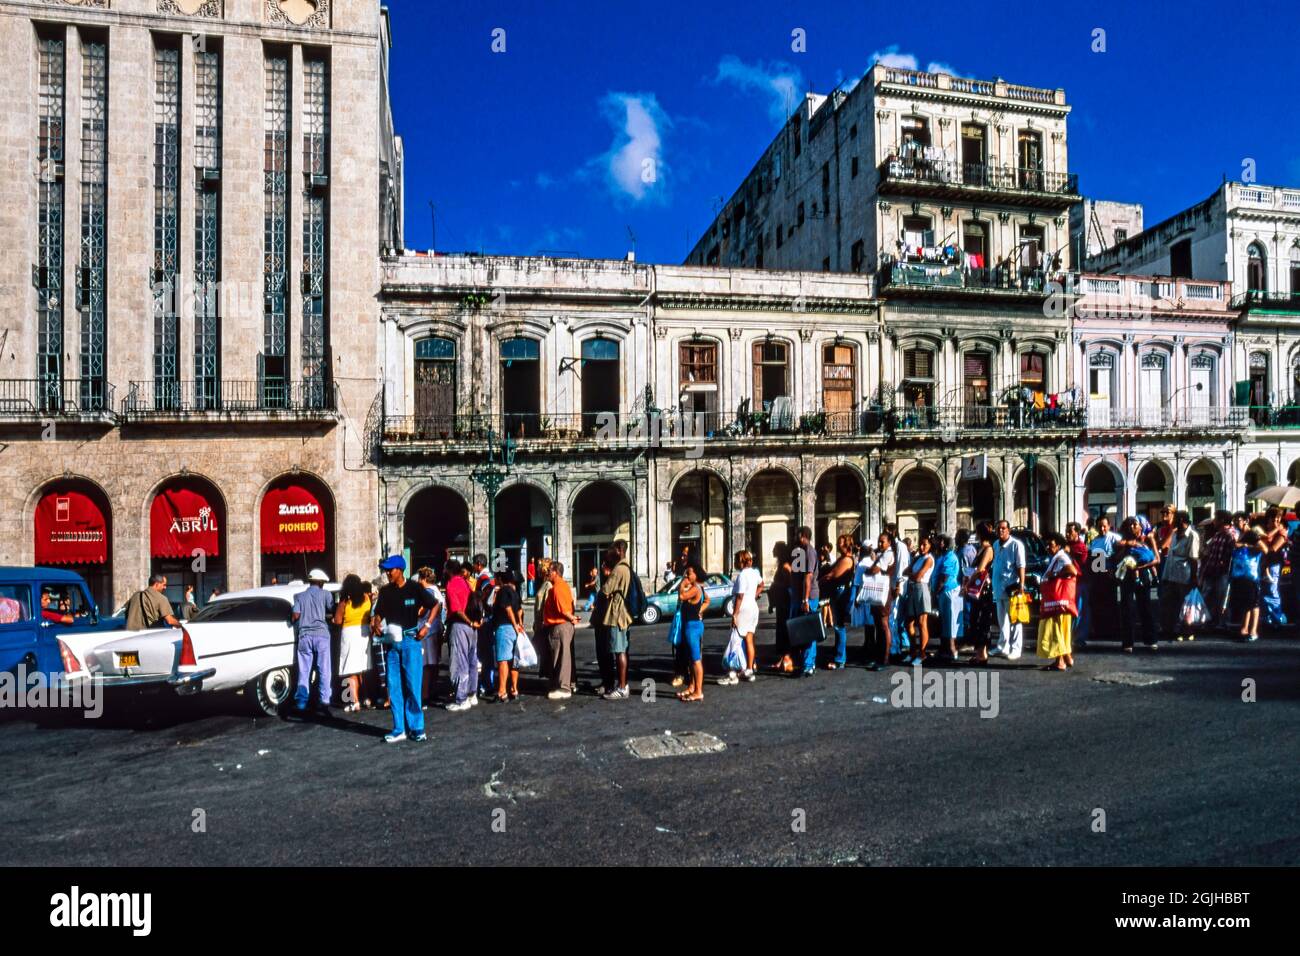 Cubans in long queue waiting for a shared taxi, central Havana, Cuba Stock Photo